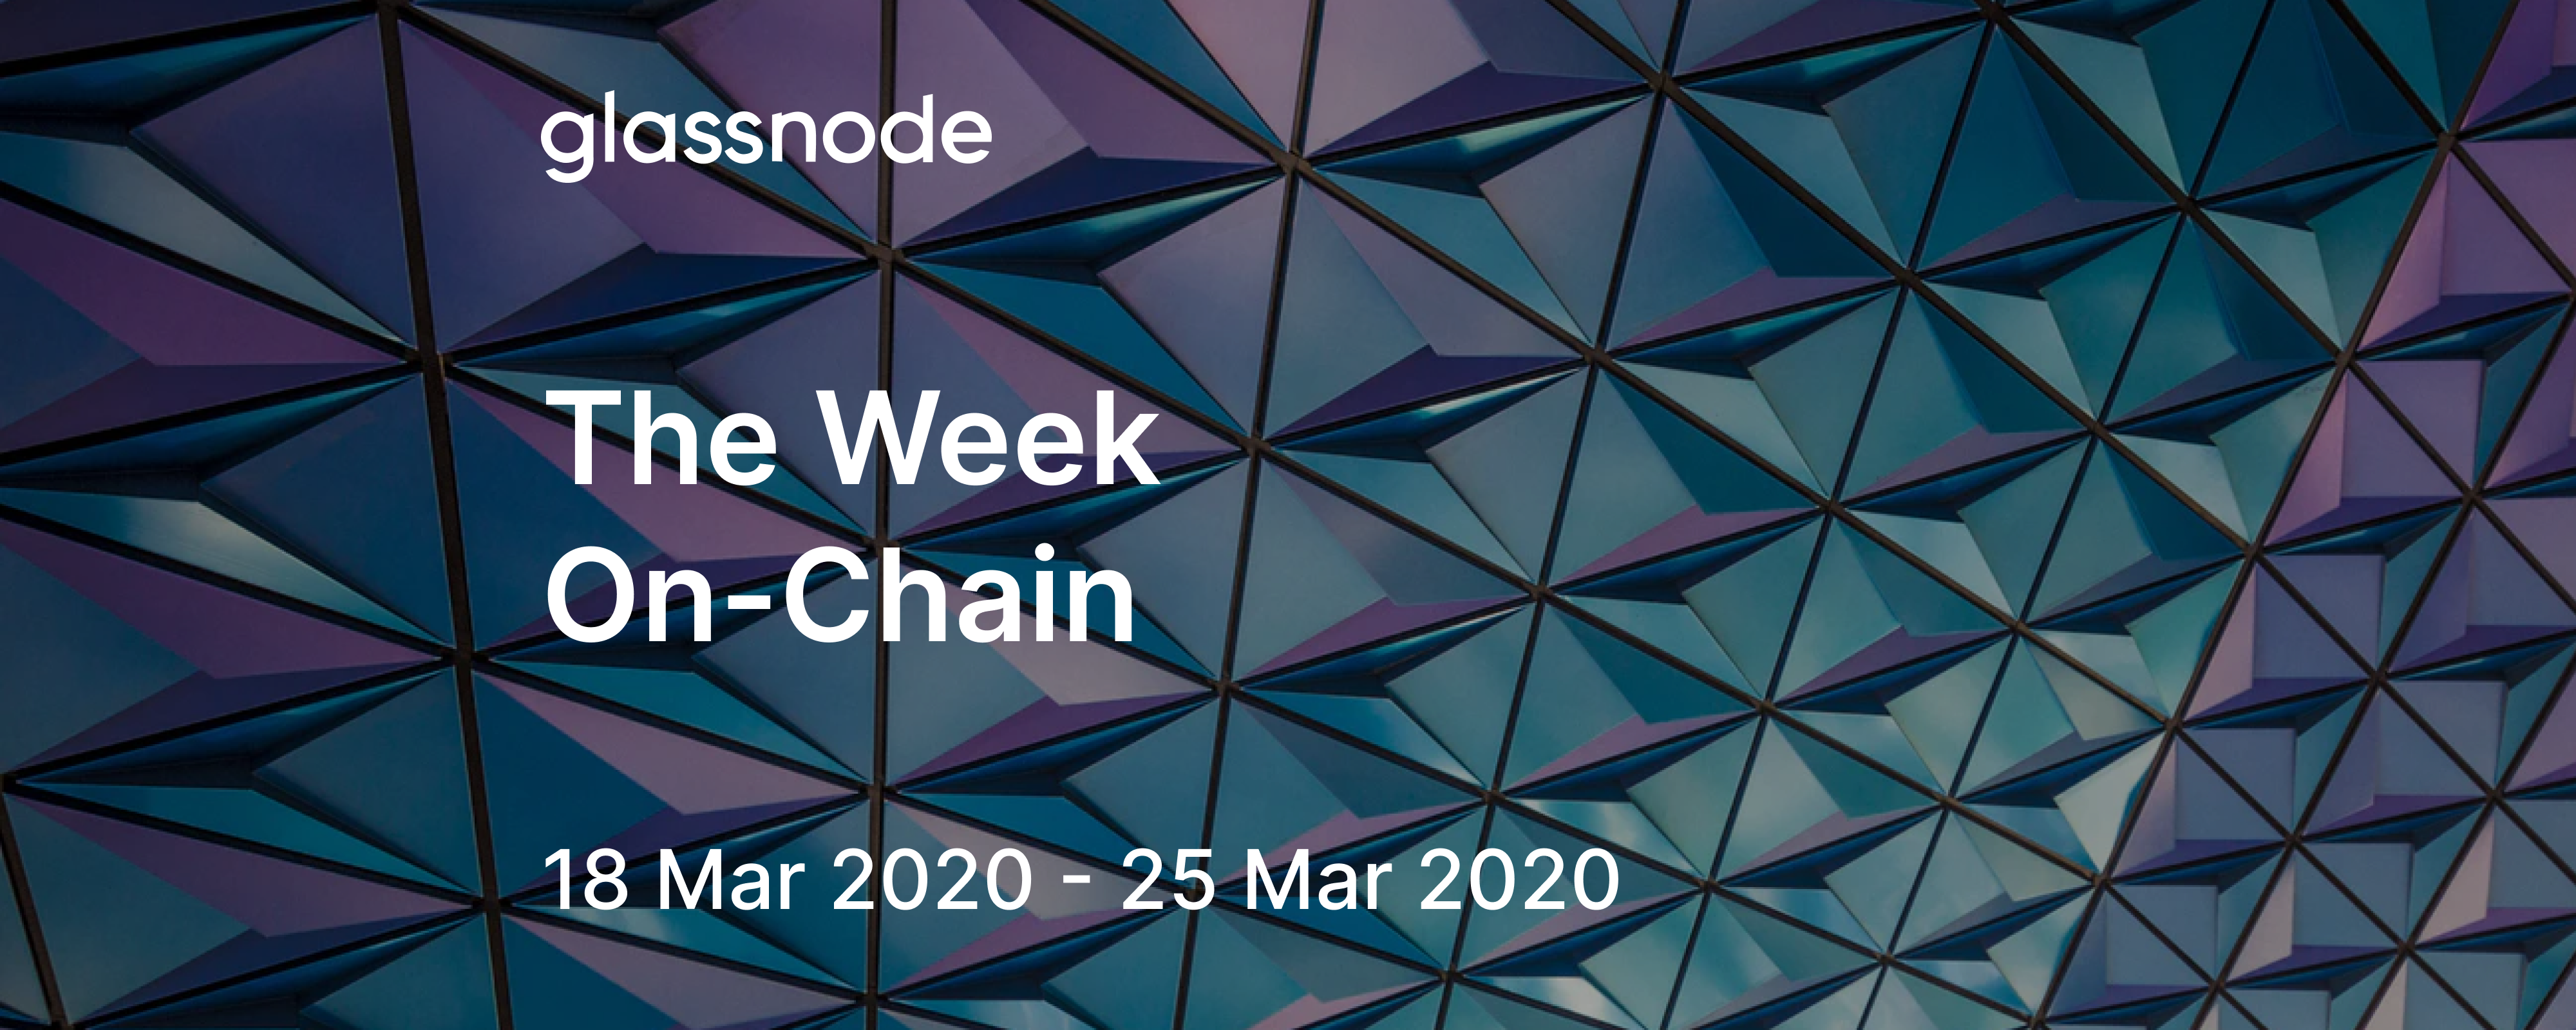 The Week On-Chain (18 Mar 2020 - 25 Mar 2020)